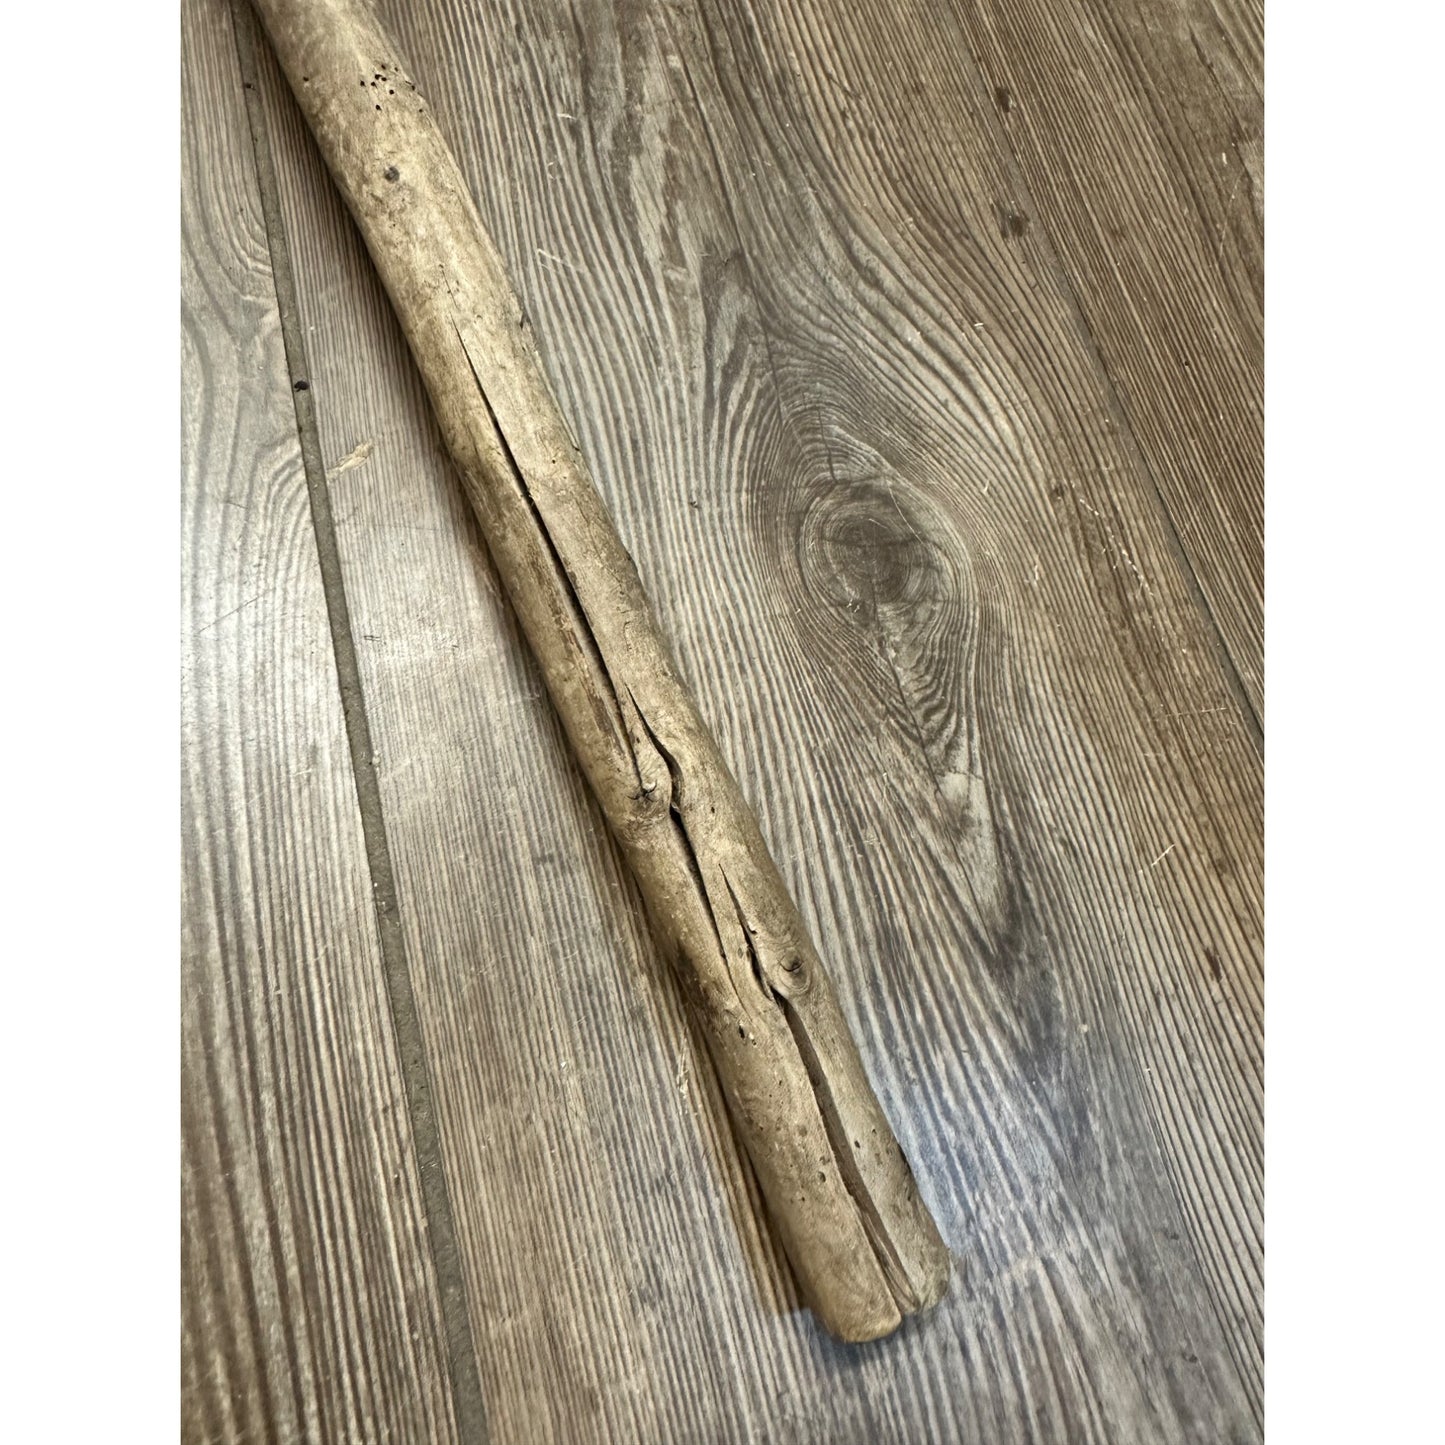 Antique Primitive Farm Sickle Corn Knife Scythe Tool w/ Handmade 28" Wood Handle